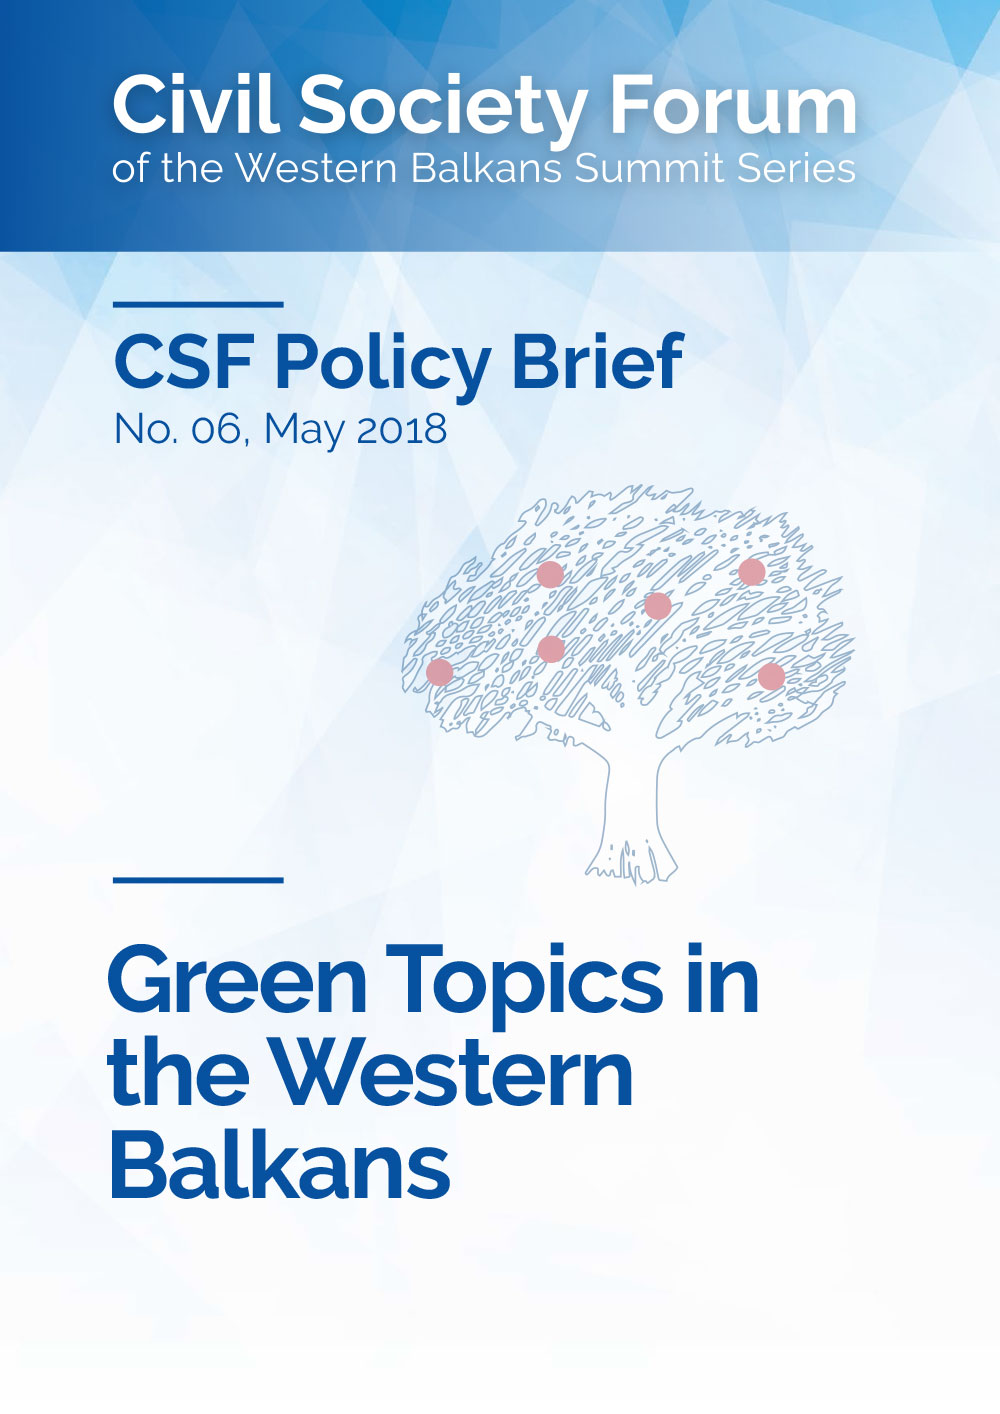 Green Topics in the Western Balkans